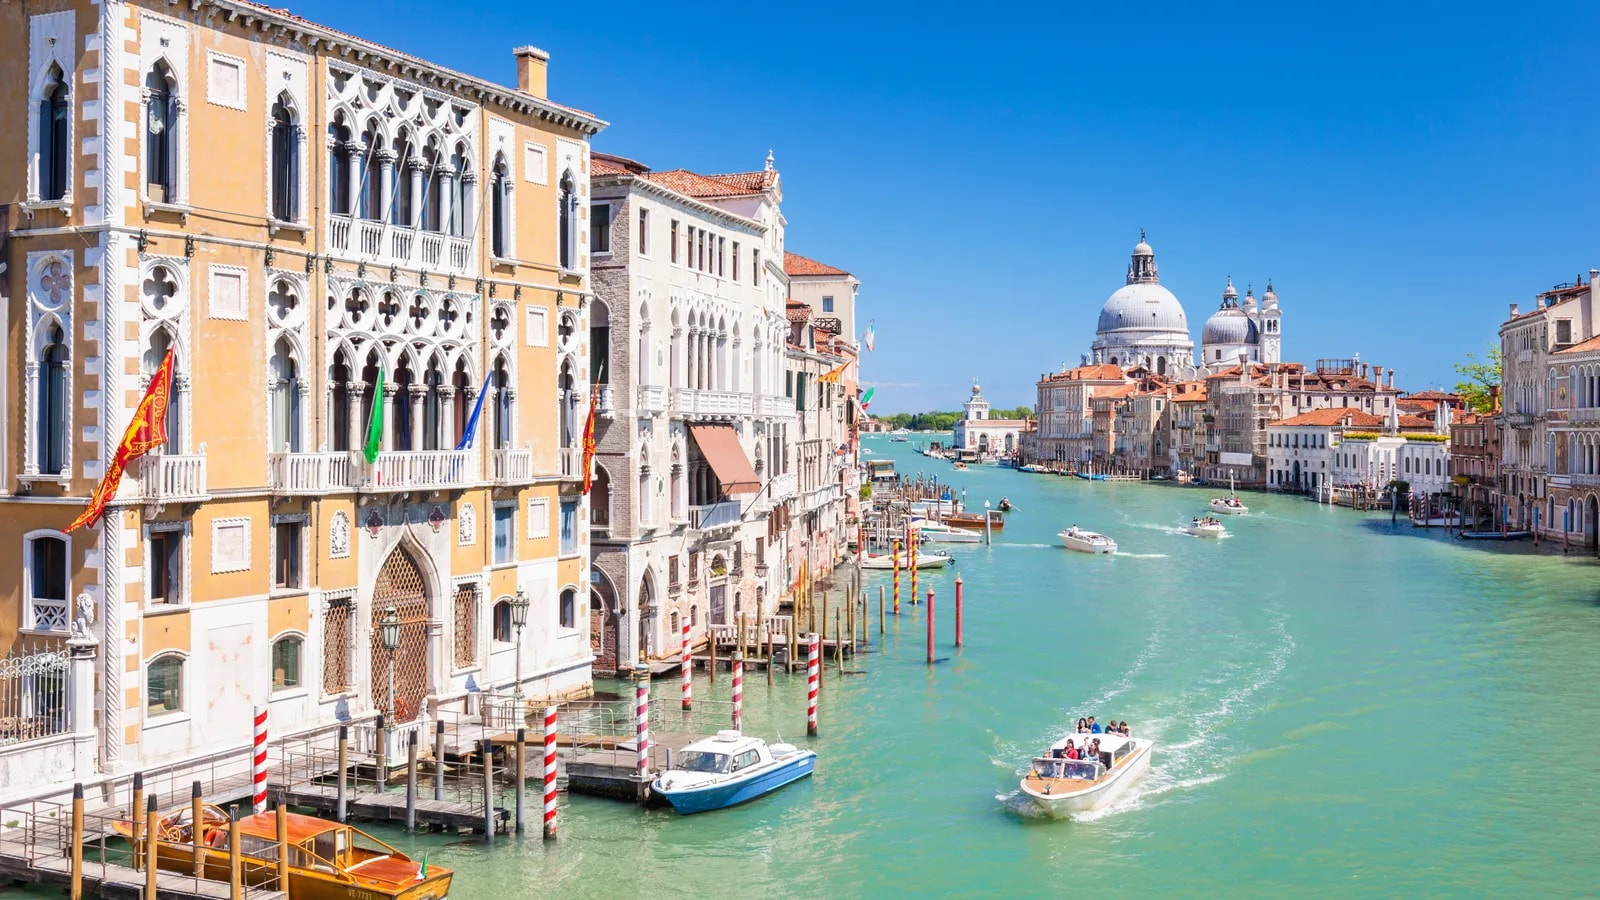 Tour Of Venice